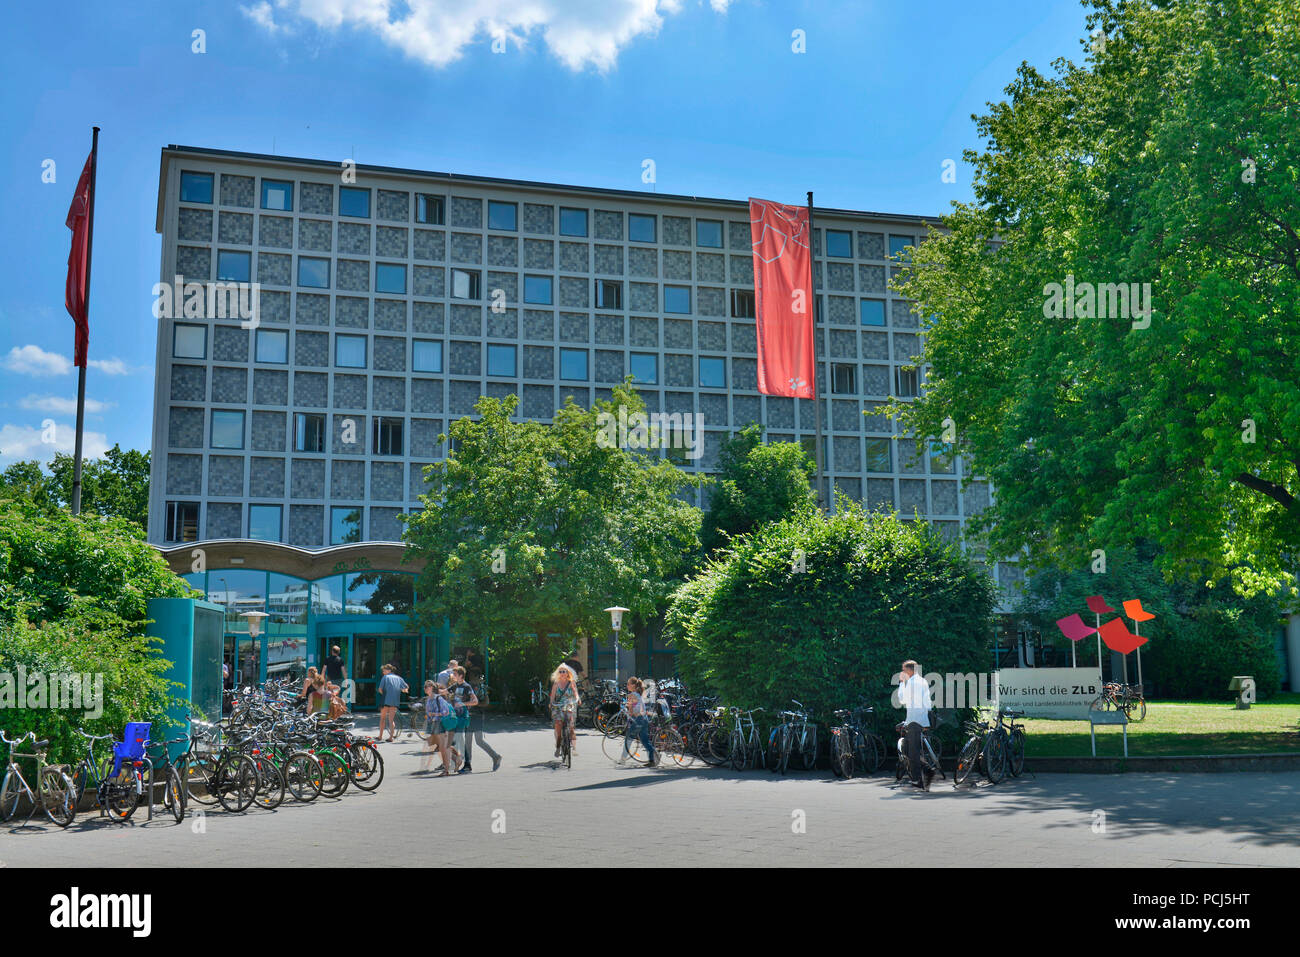 Amerika-Gedenkbibliothek, Bluecherplatz, Kreuzberg, Berlin, Deutschland Stockfoto